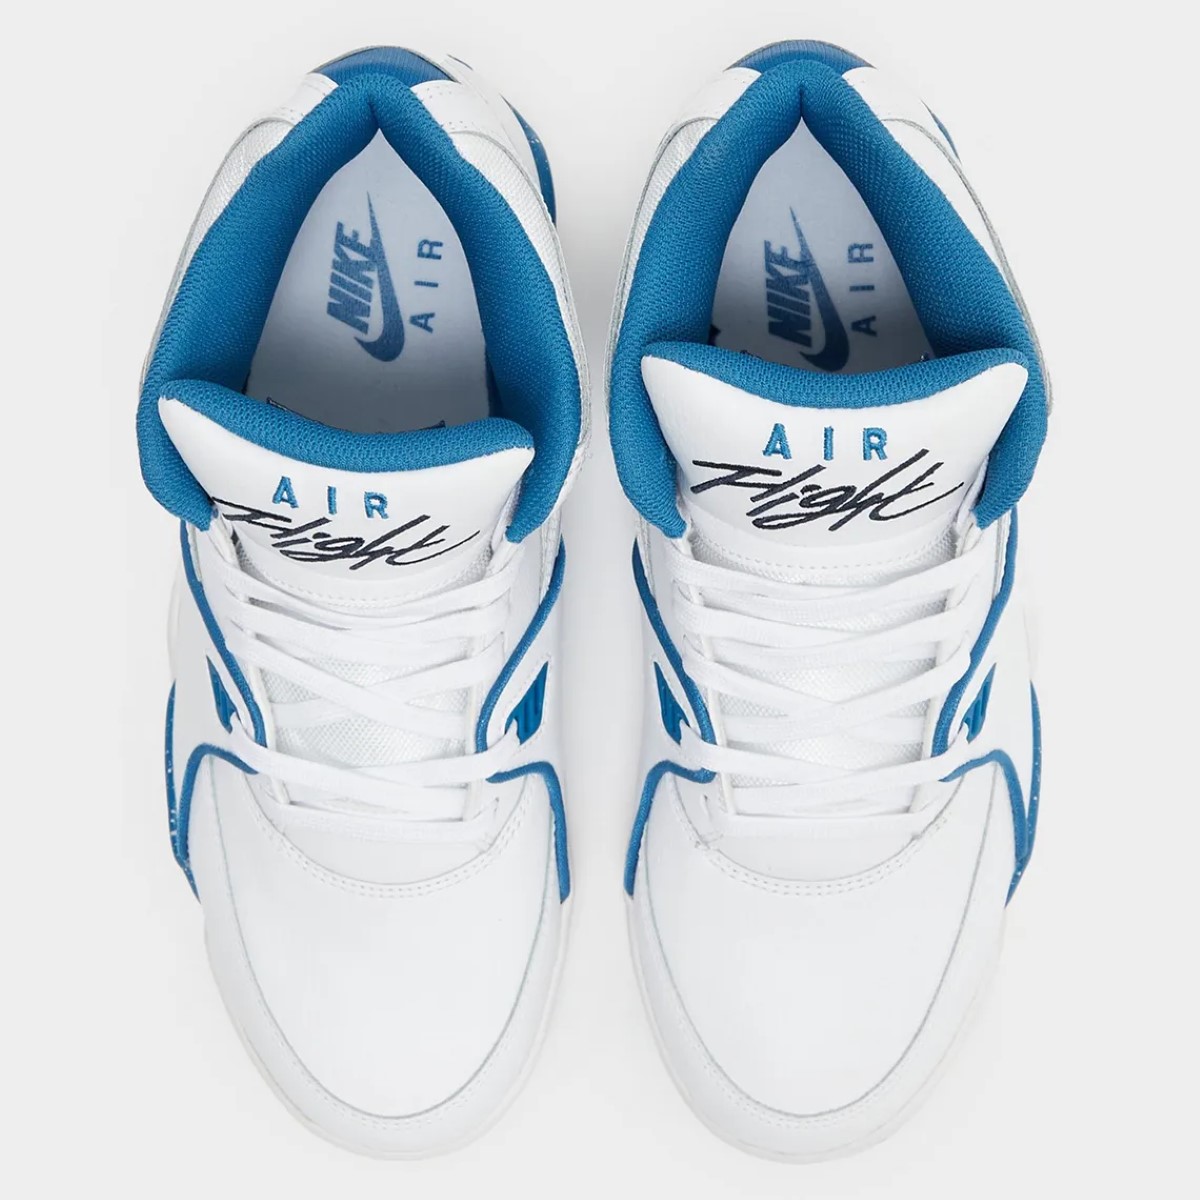 The return of the Nike Air Flight ’89 “Brigade Blue” marks a footwear rebirth